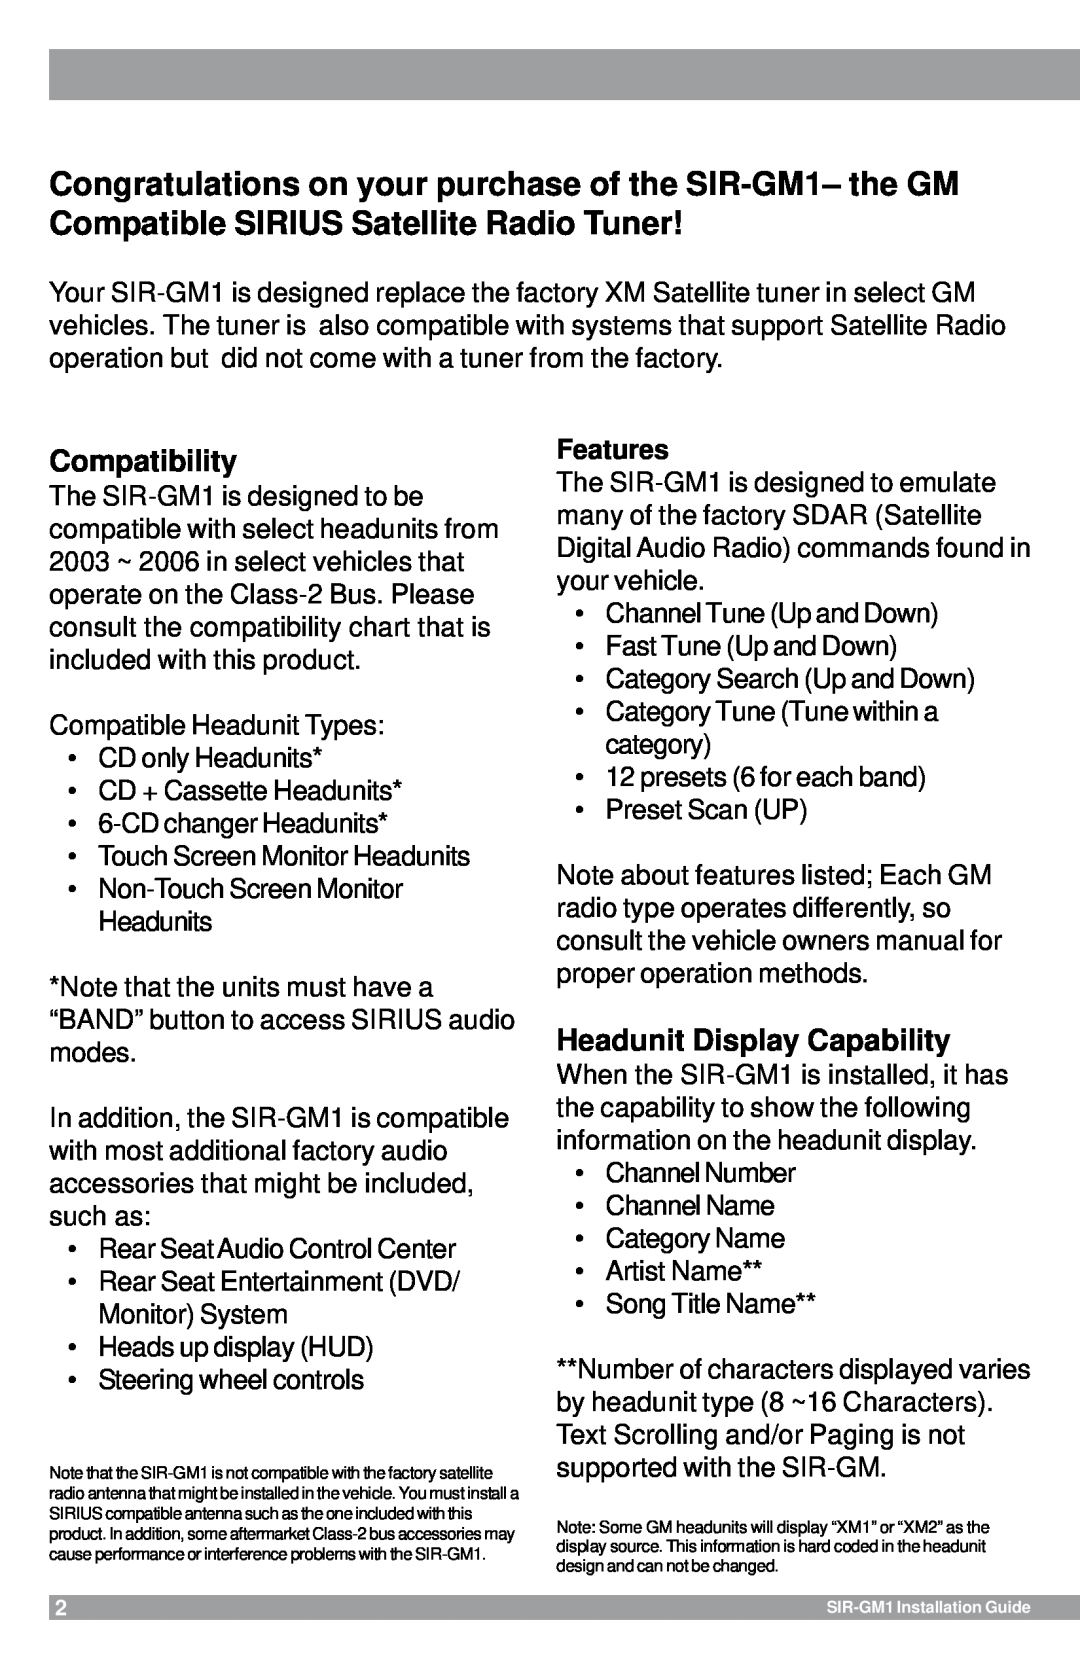 Sirius Satellite Radio SIR-GM1 manual Features, Compatibility, Headunit Display Capability 